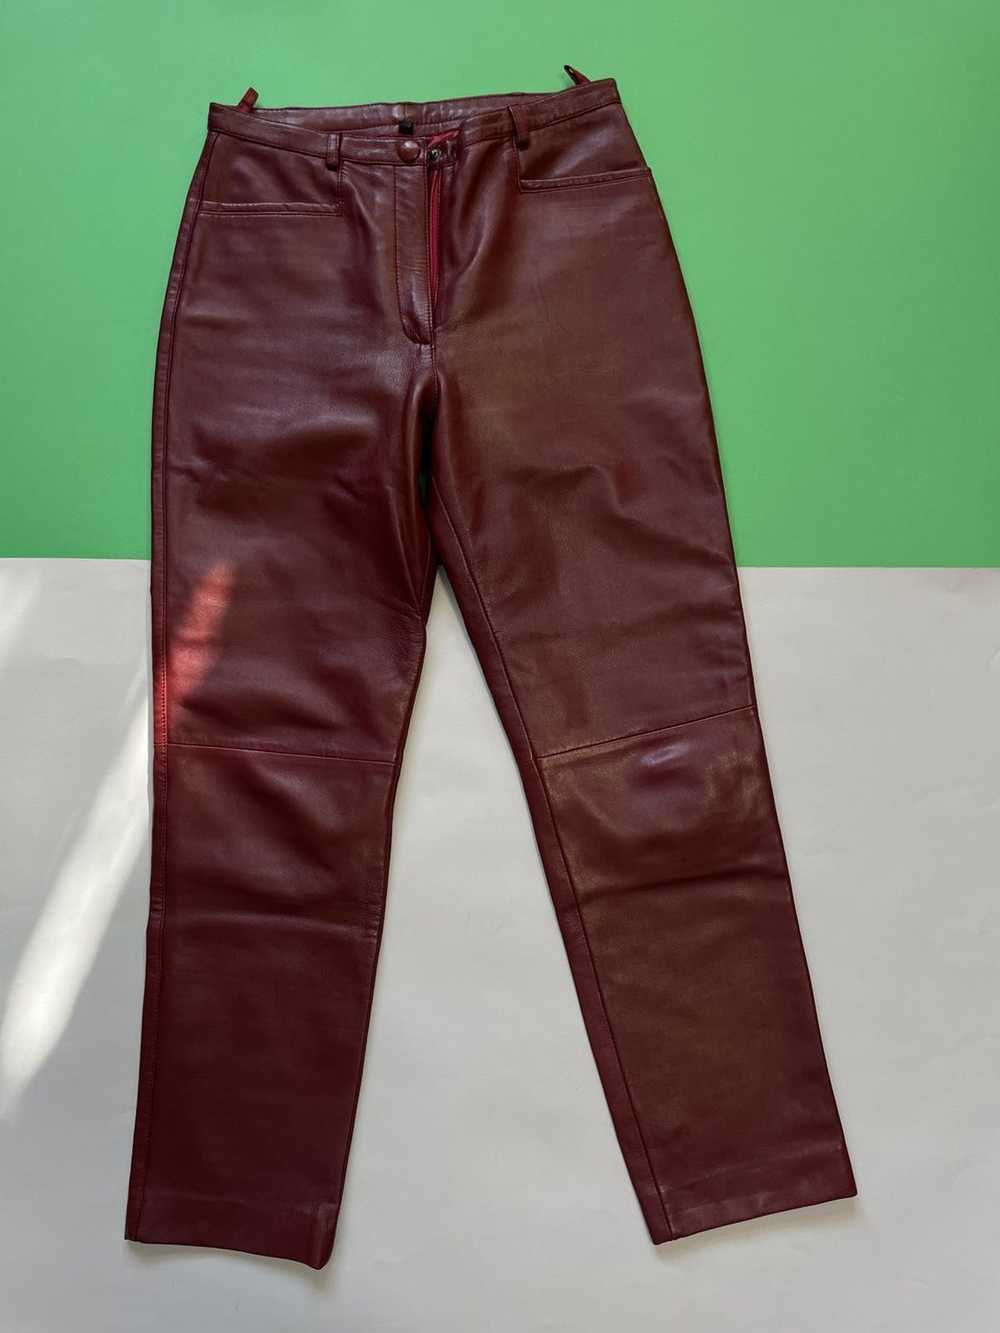 Japanese Brand × Vintage Genuine Leather Pants - image 1